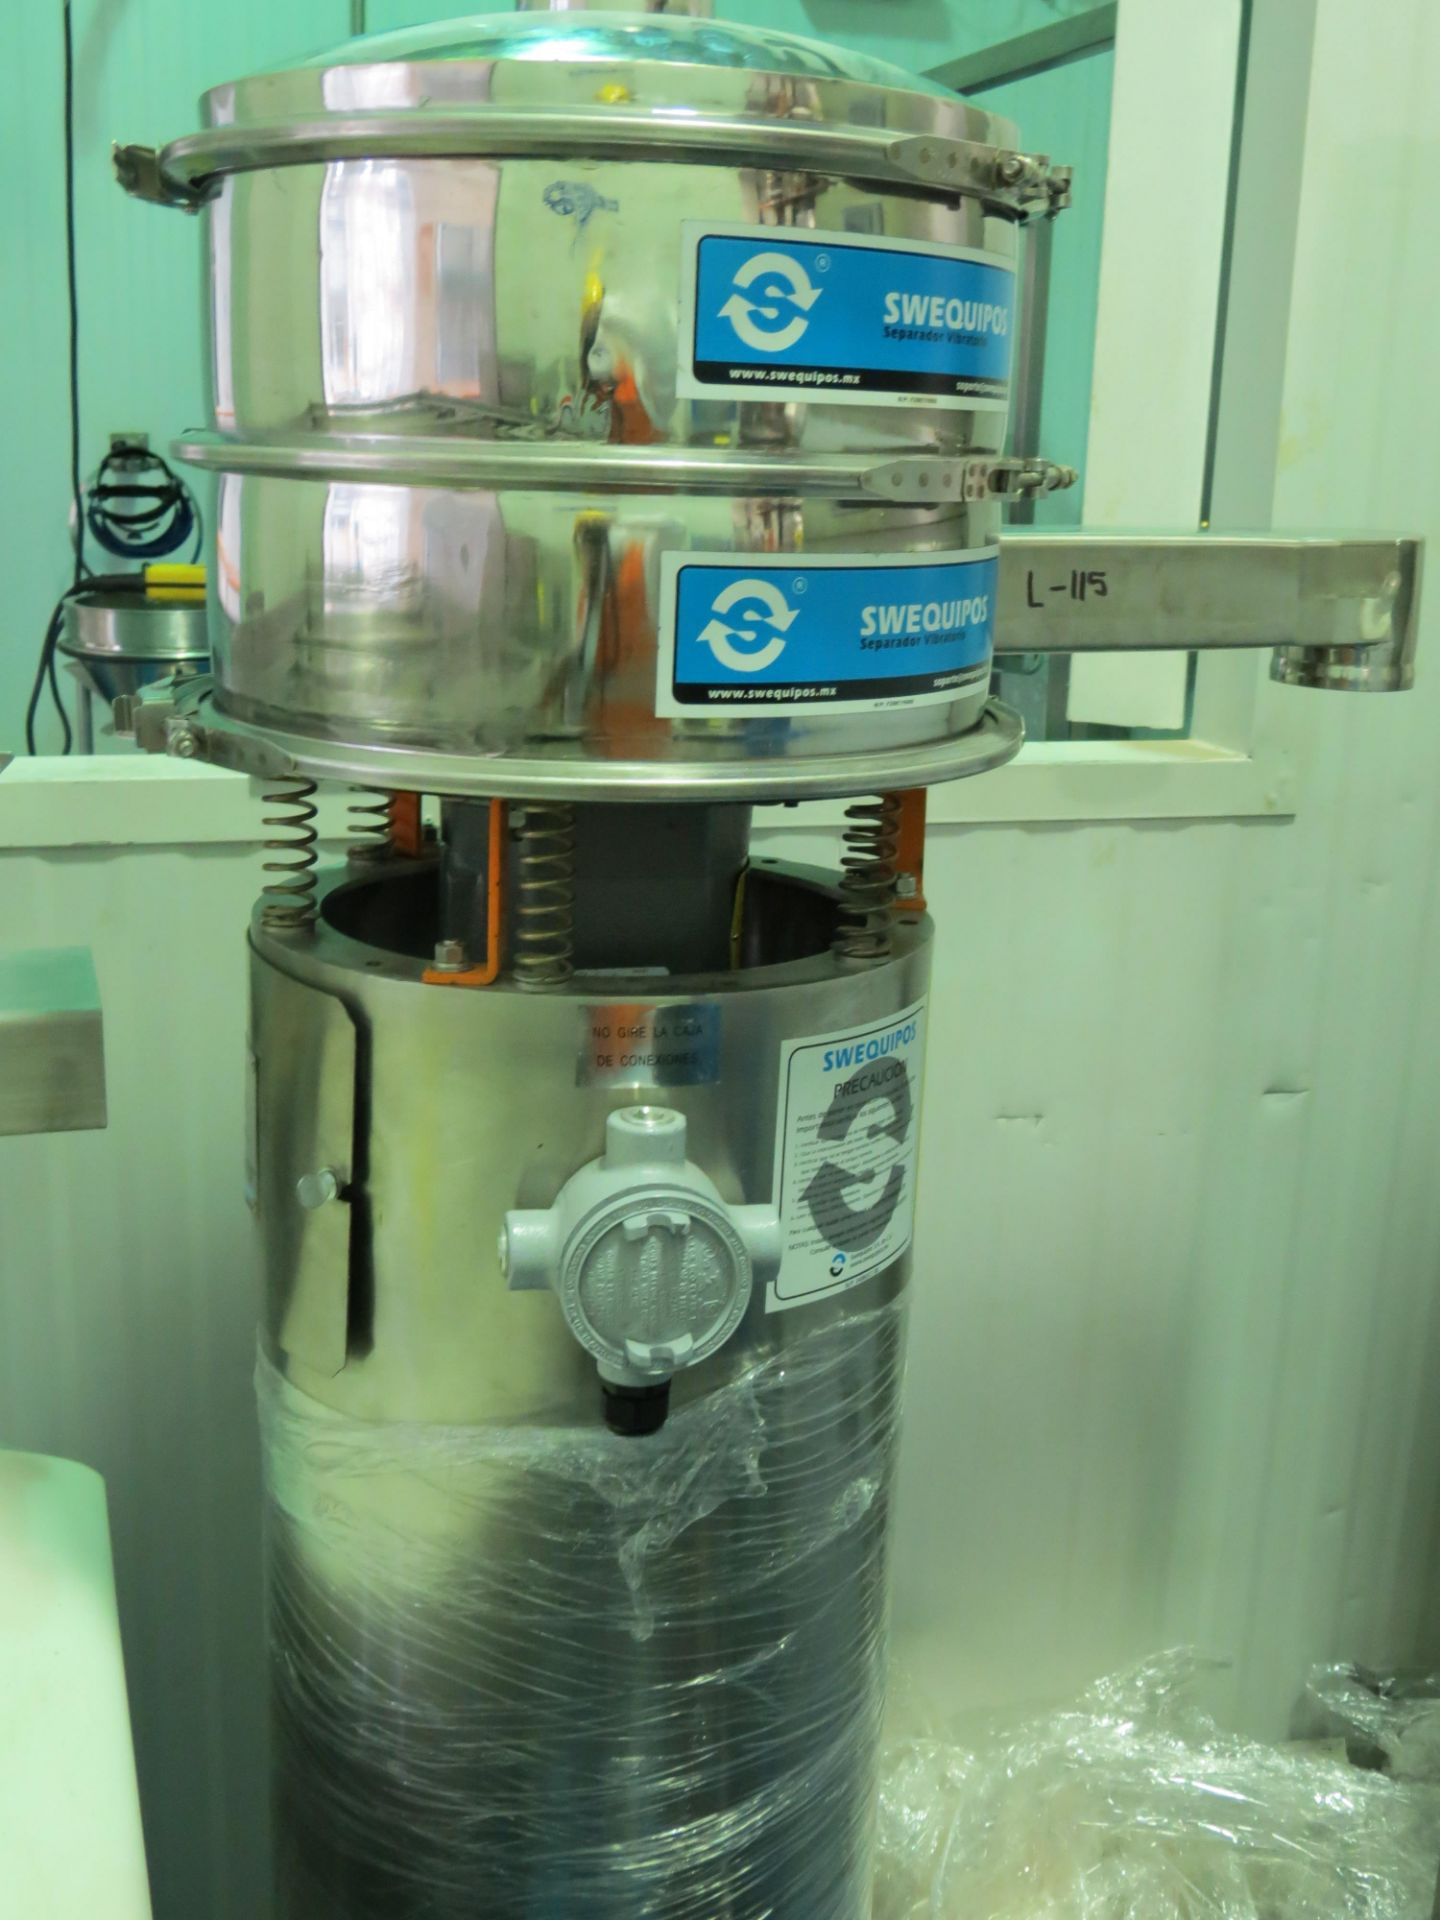 Swequipos Vibratory Screener / Separator, ,with Baldor motor of 2.5 HP, 1140 RPM. - Image 3 of 6